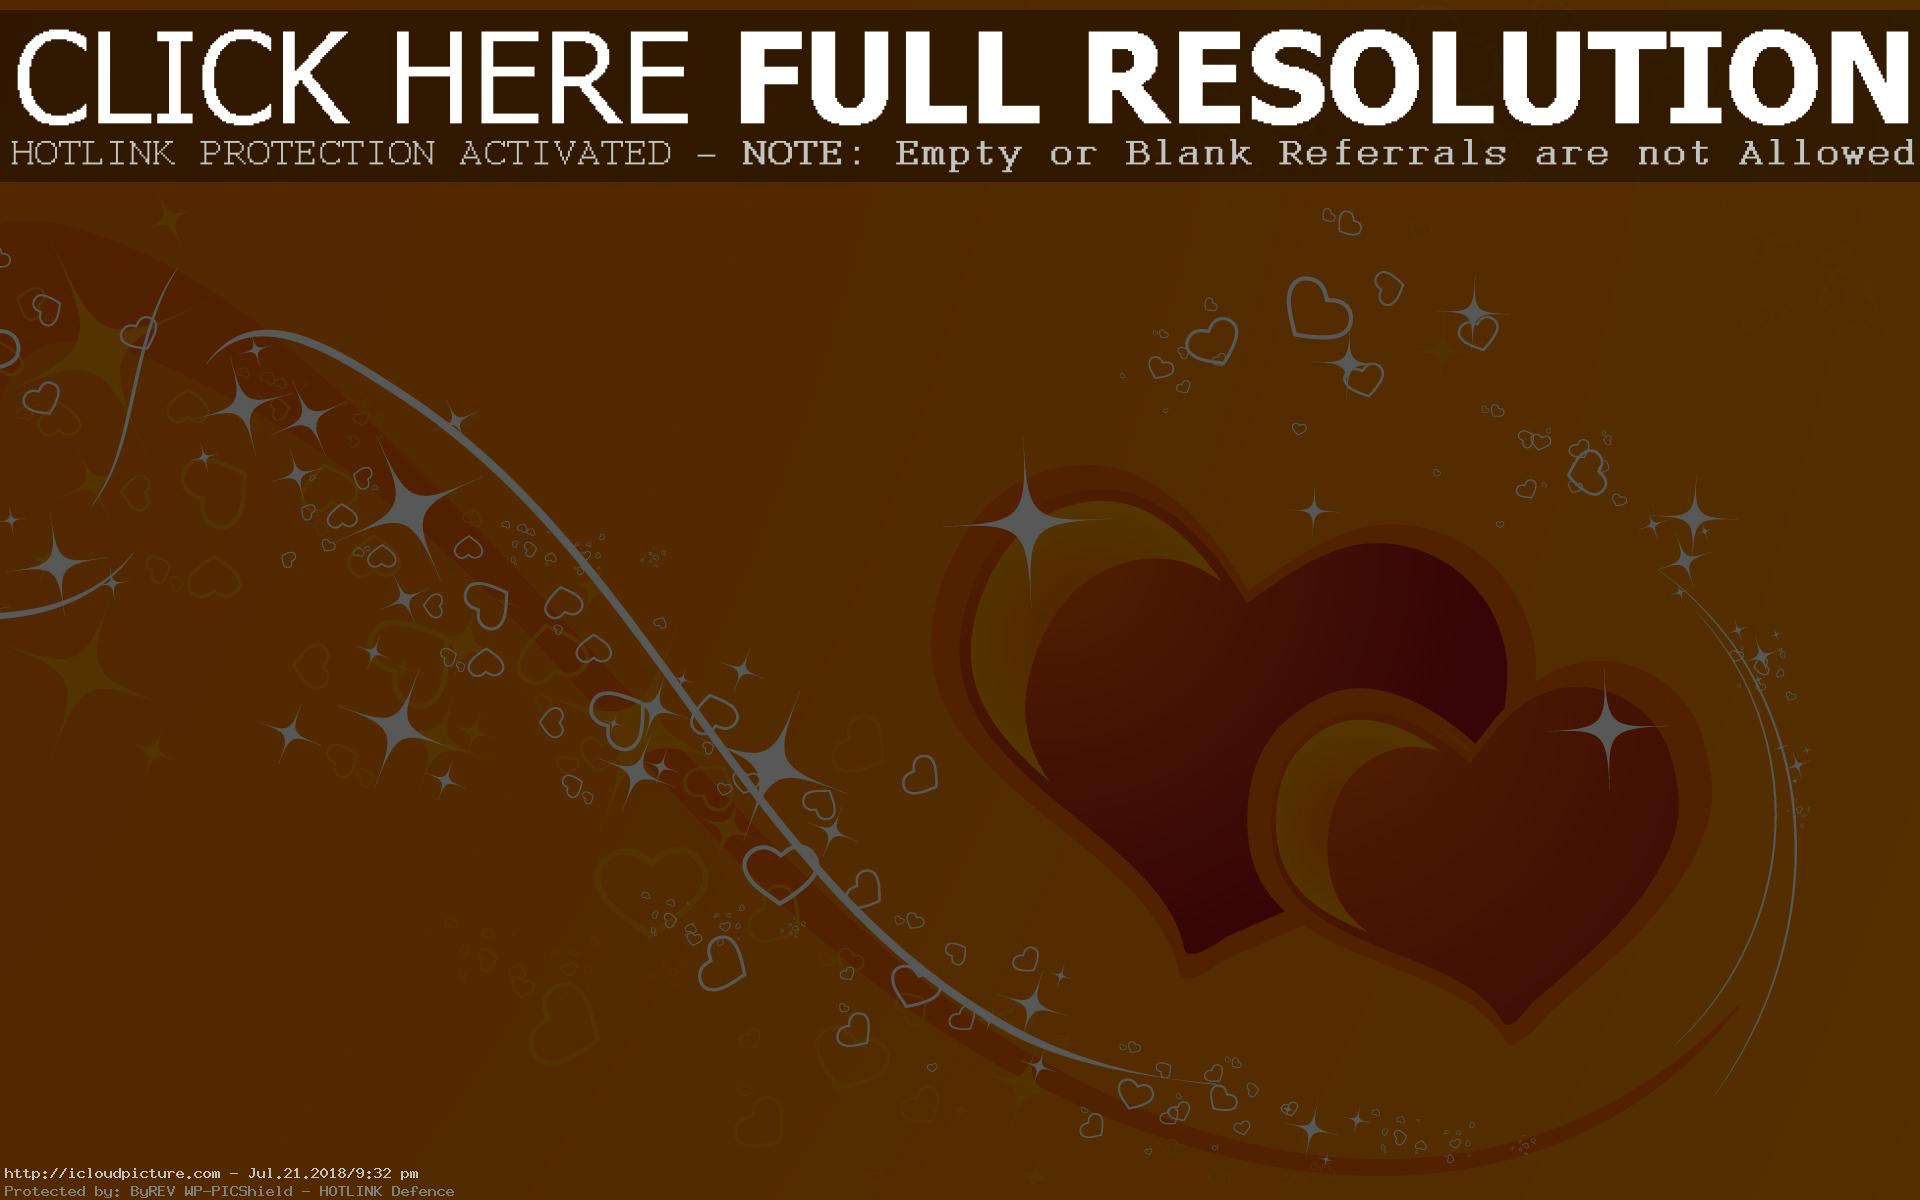 Malayalam Love Wallpapers Free Download - Warren Street Tube Station , HD Wallpaper & Backgrounds